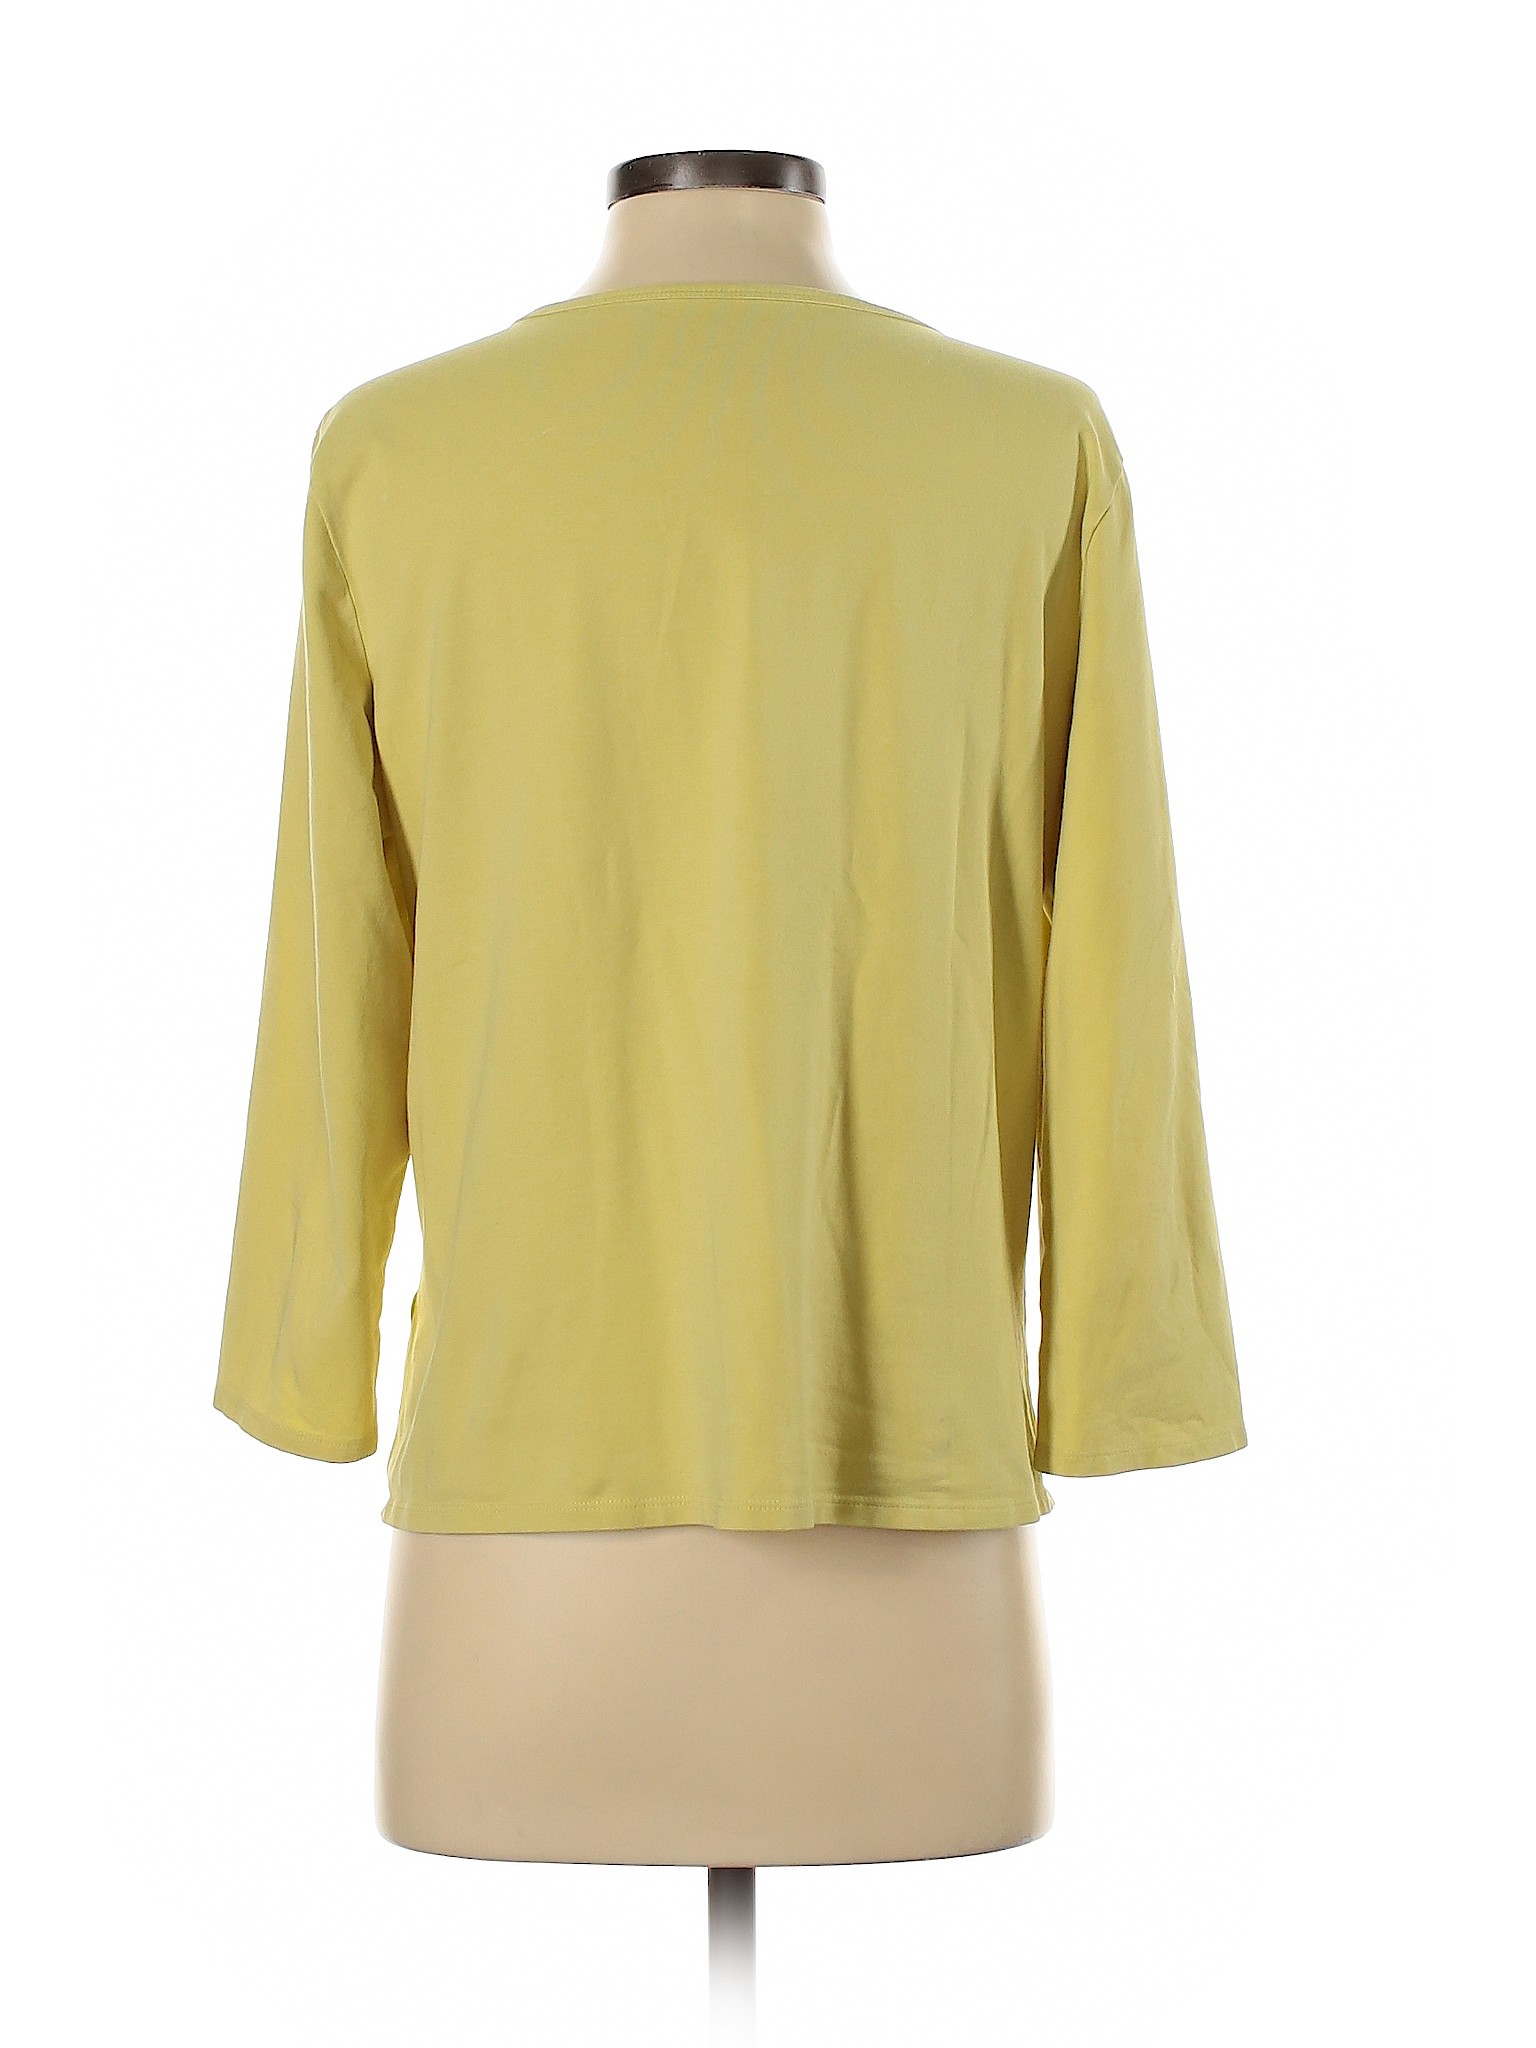 J.jill Women Yellow 3/4 Sleeve Blouse M | eBay